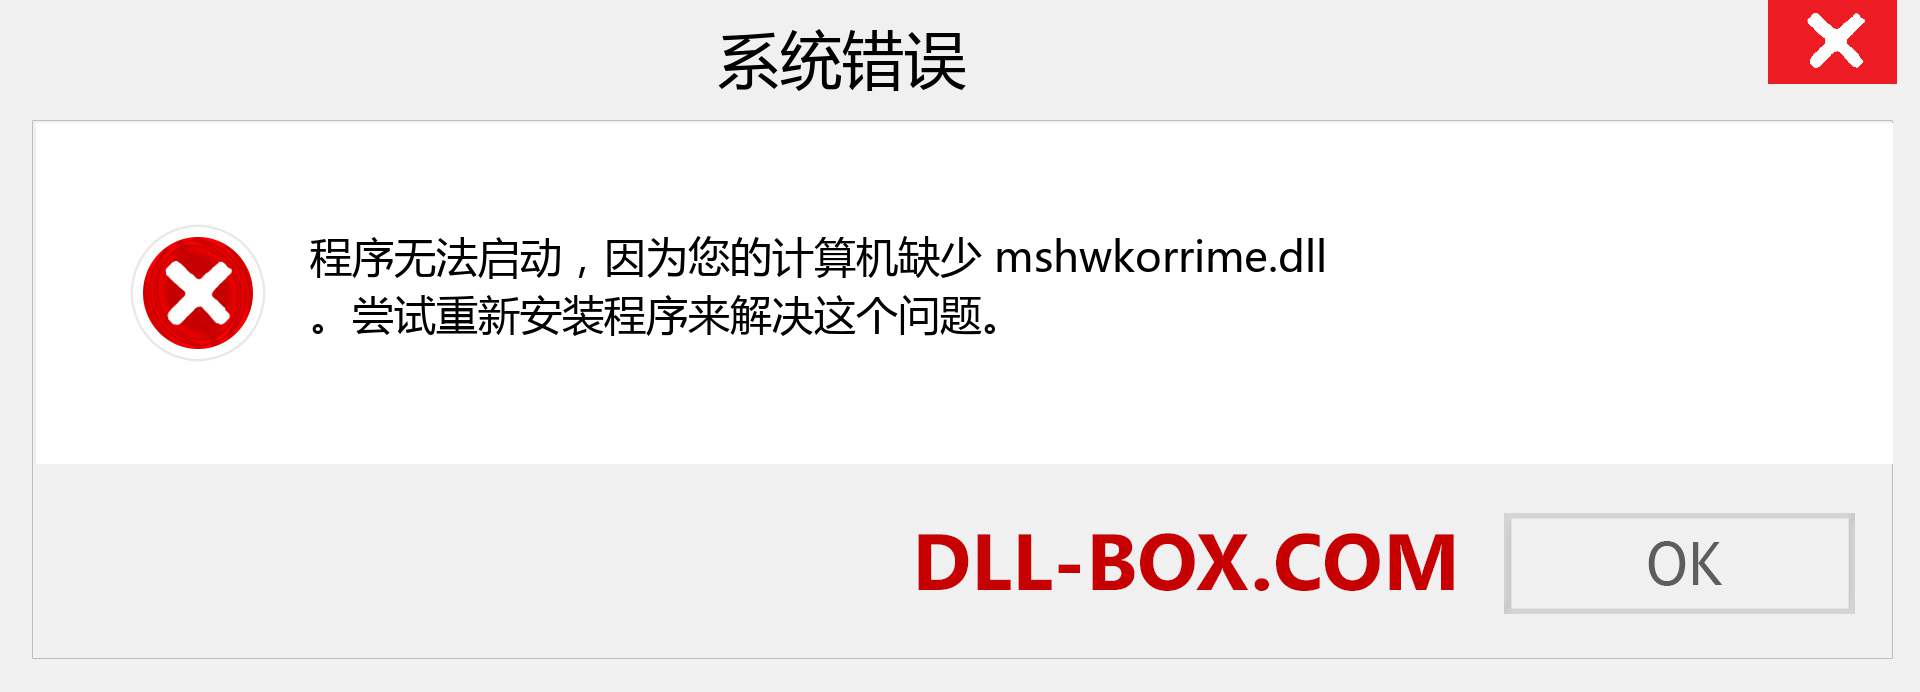 mshwkorrime.dll 文件丢失？。 适用于 Windows 7、8、10 的下载 - 修复 Windows、照片、图像上的 mshwkorrime dll 丢失错误